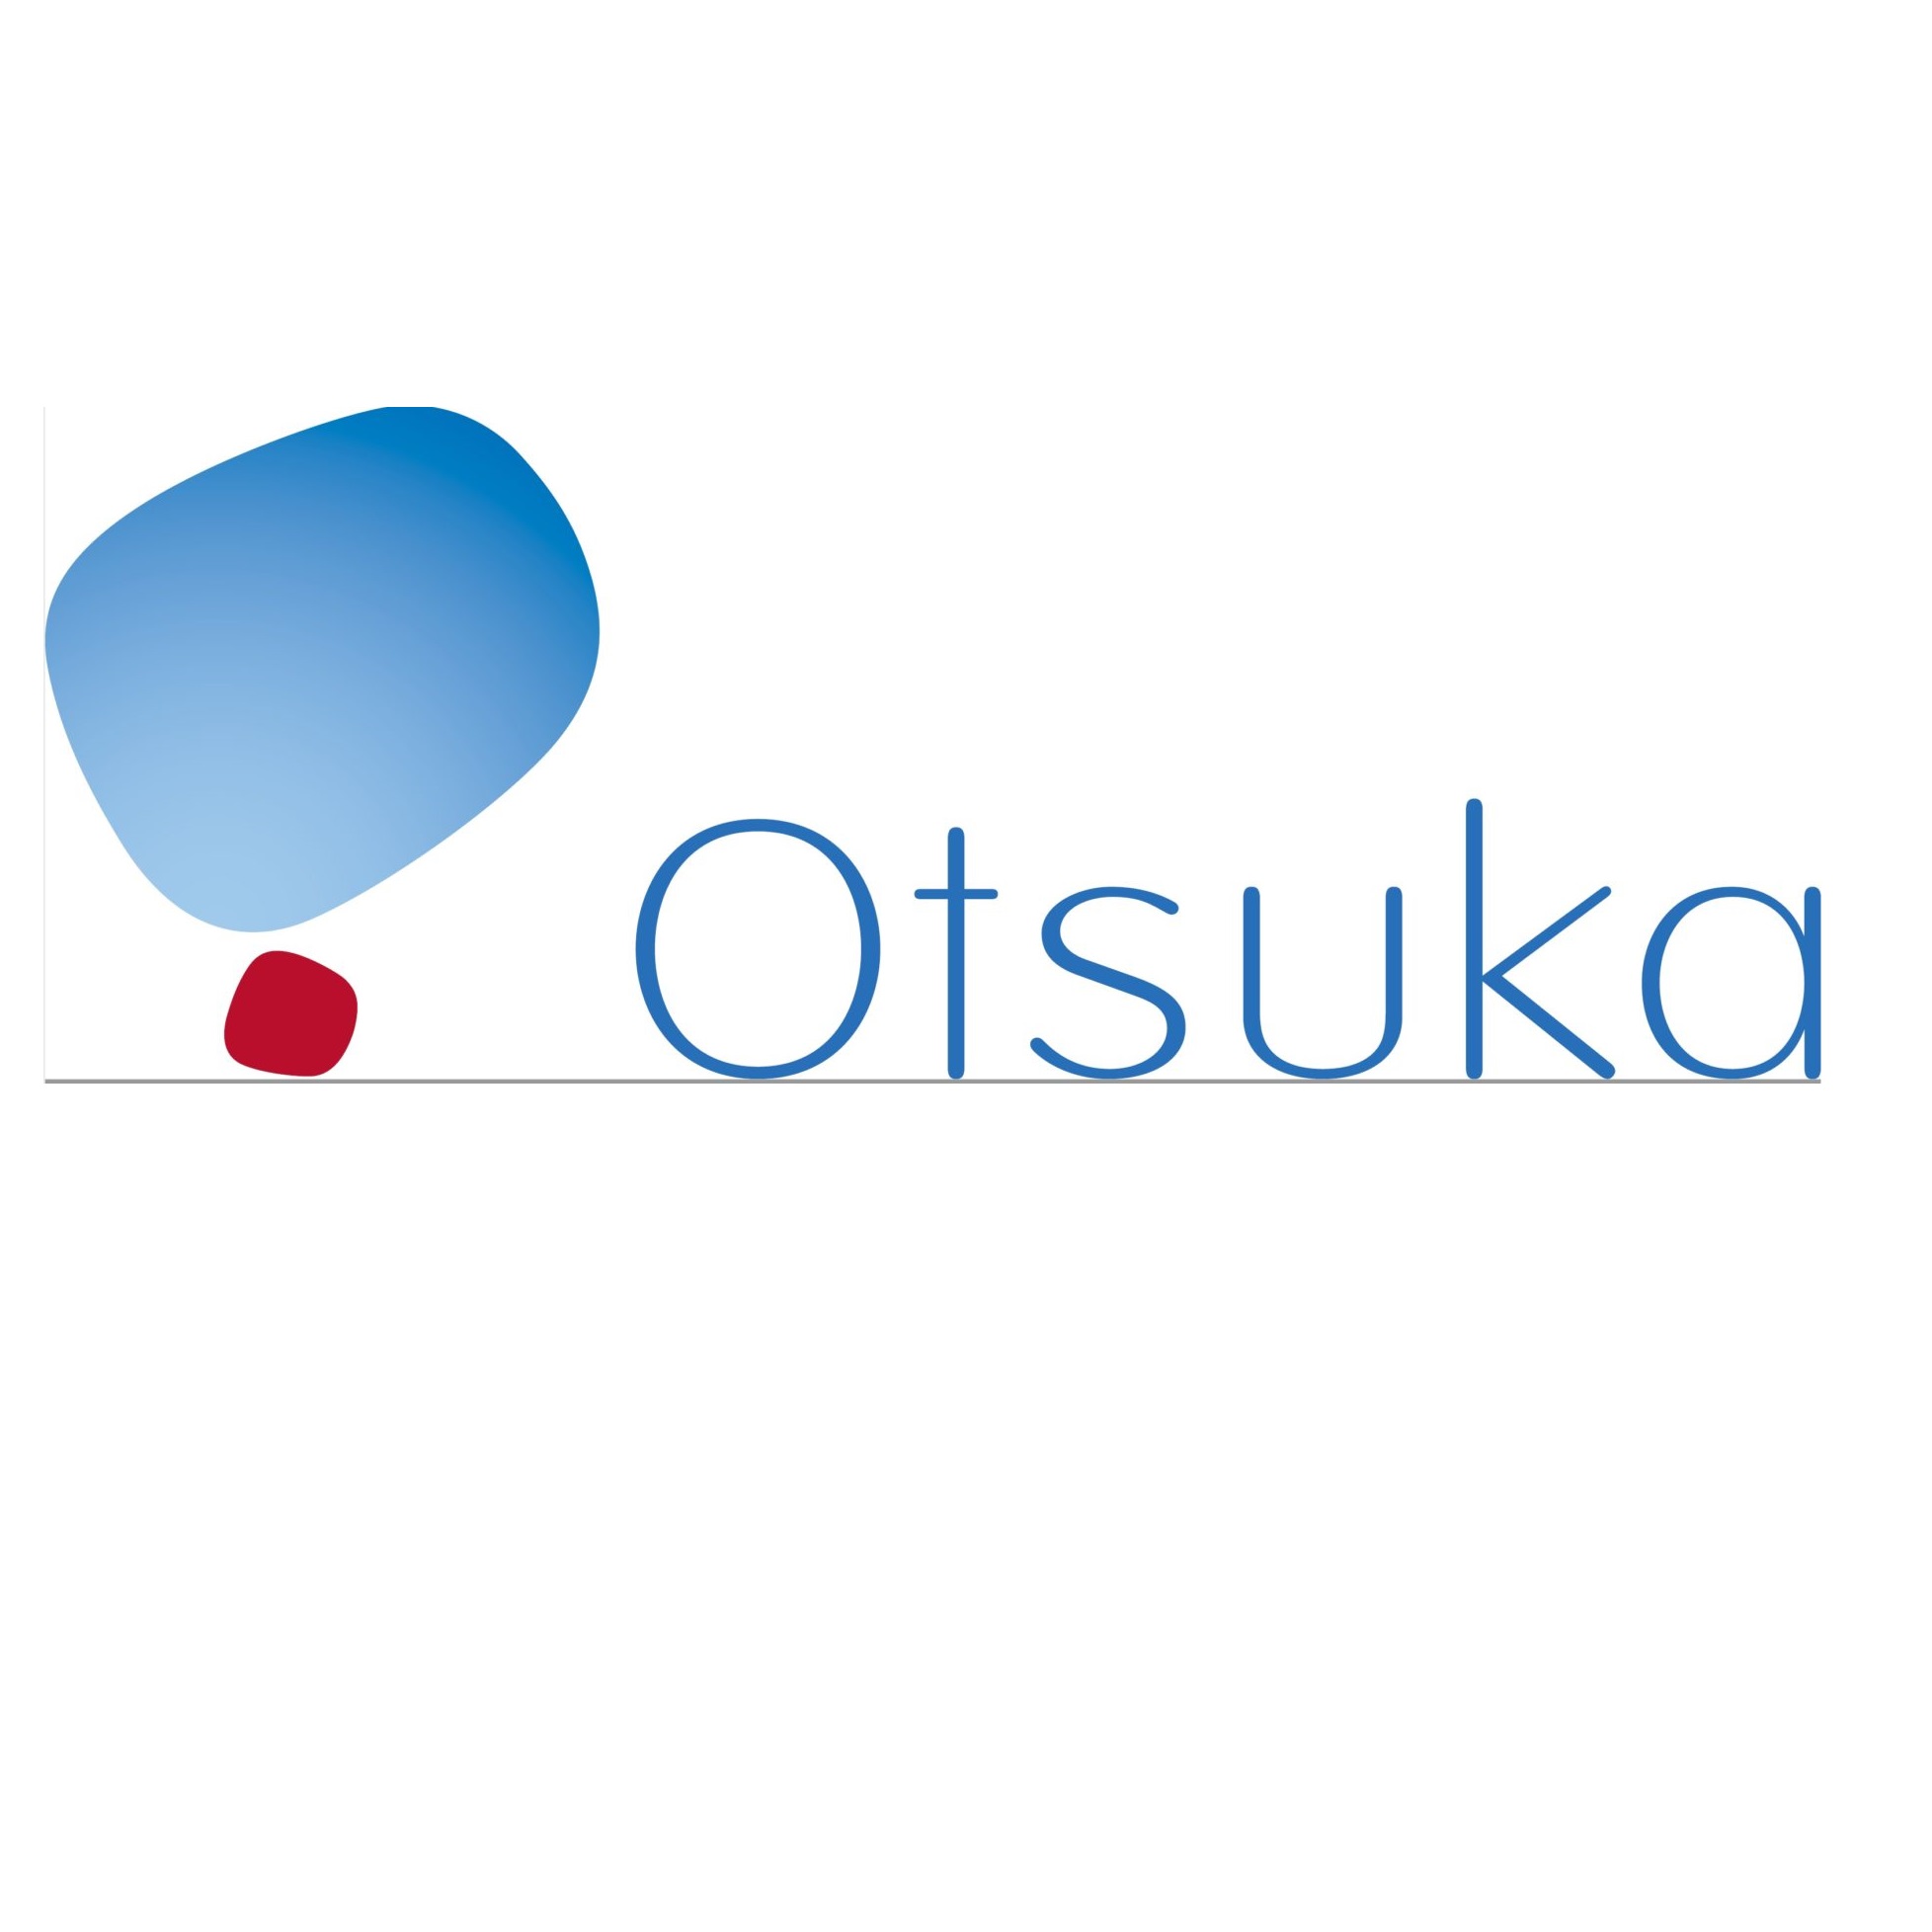 Otsuka Japanese Pharmaceutical company